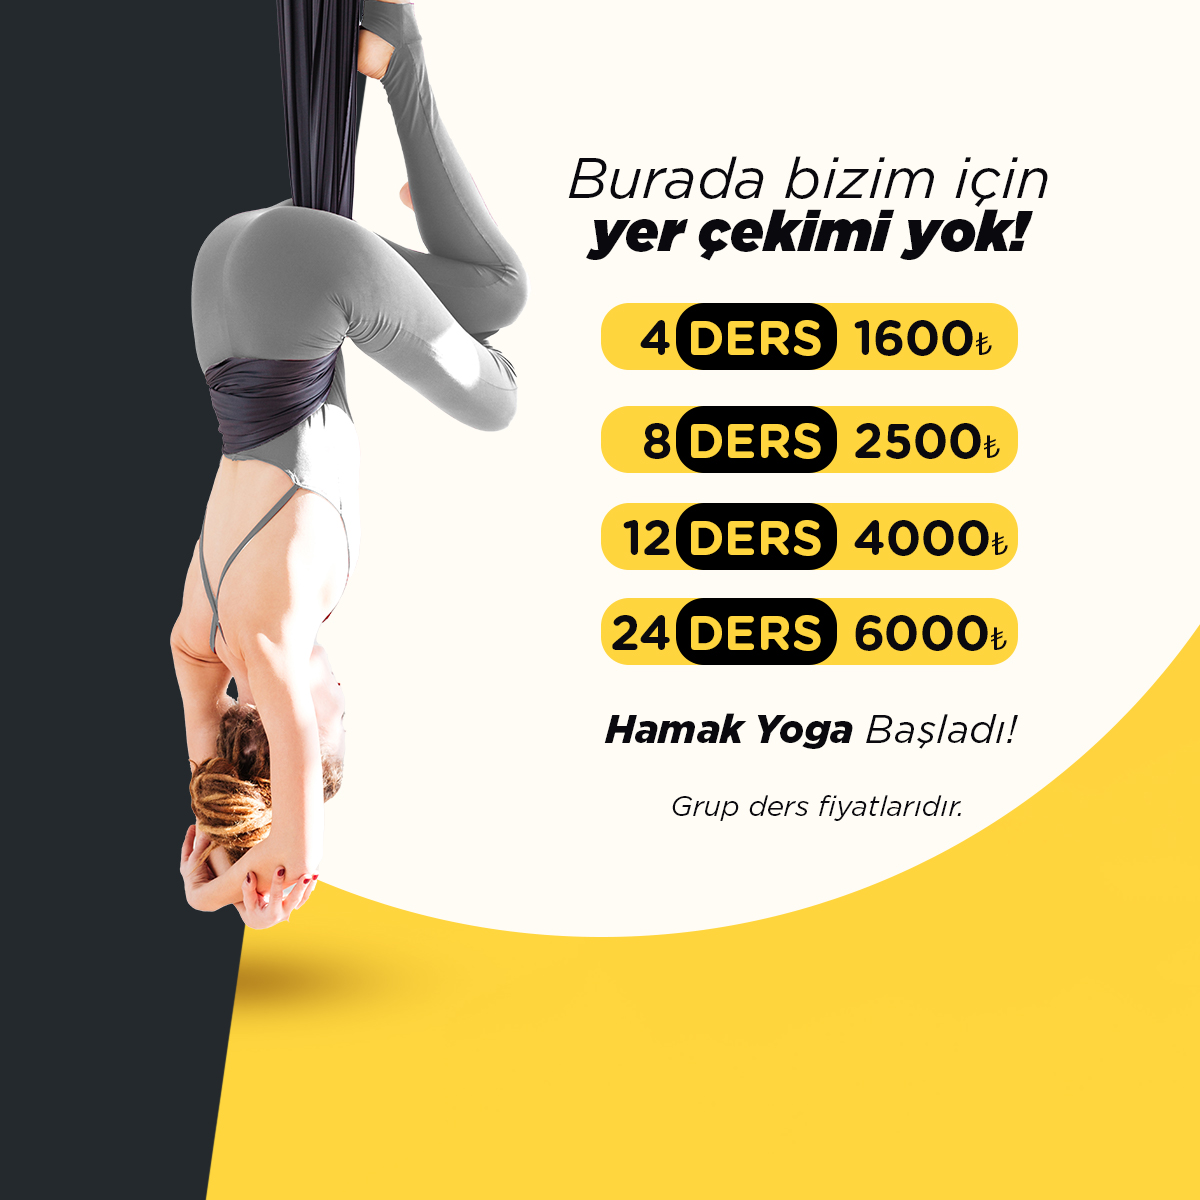 Hamak yoga (fly yoga)